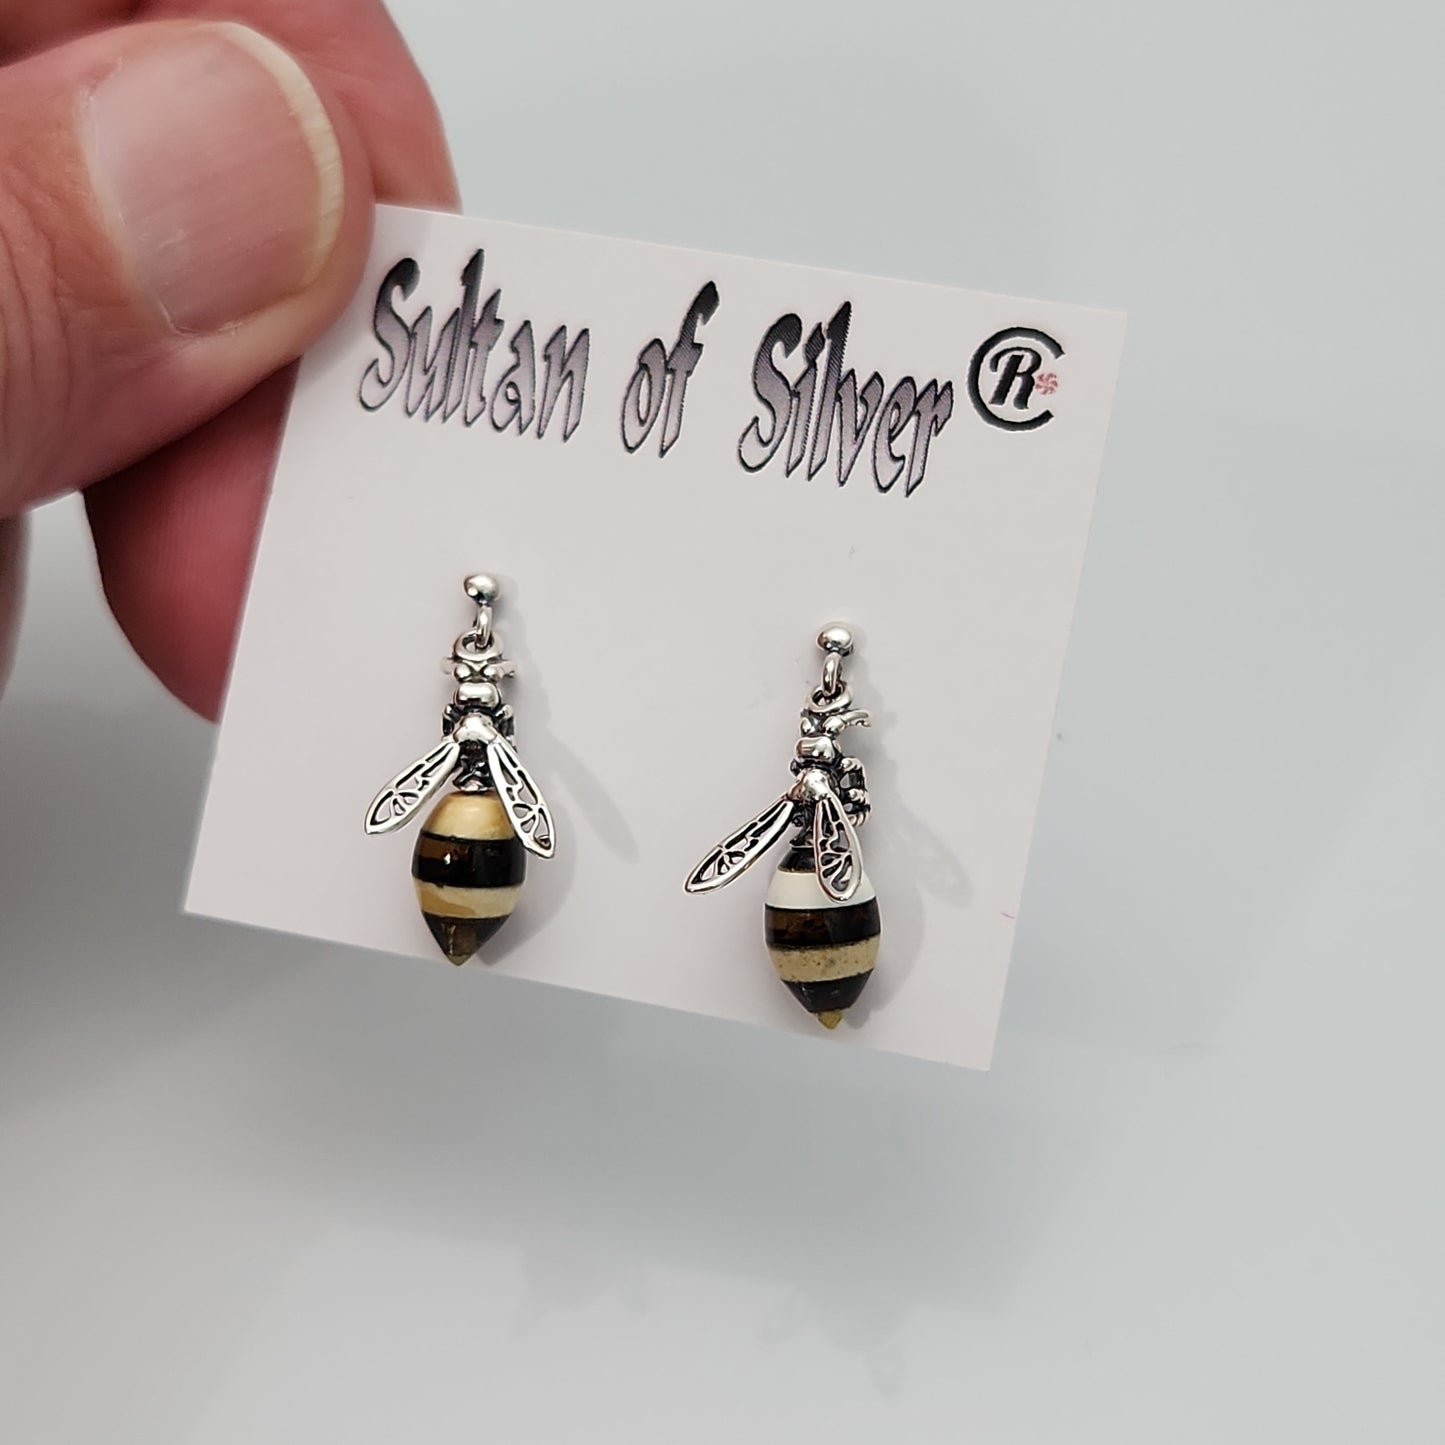 Amber Bee Earrings